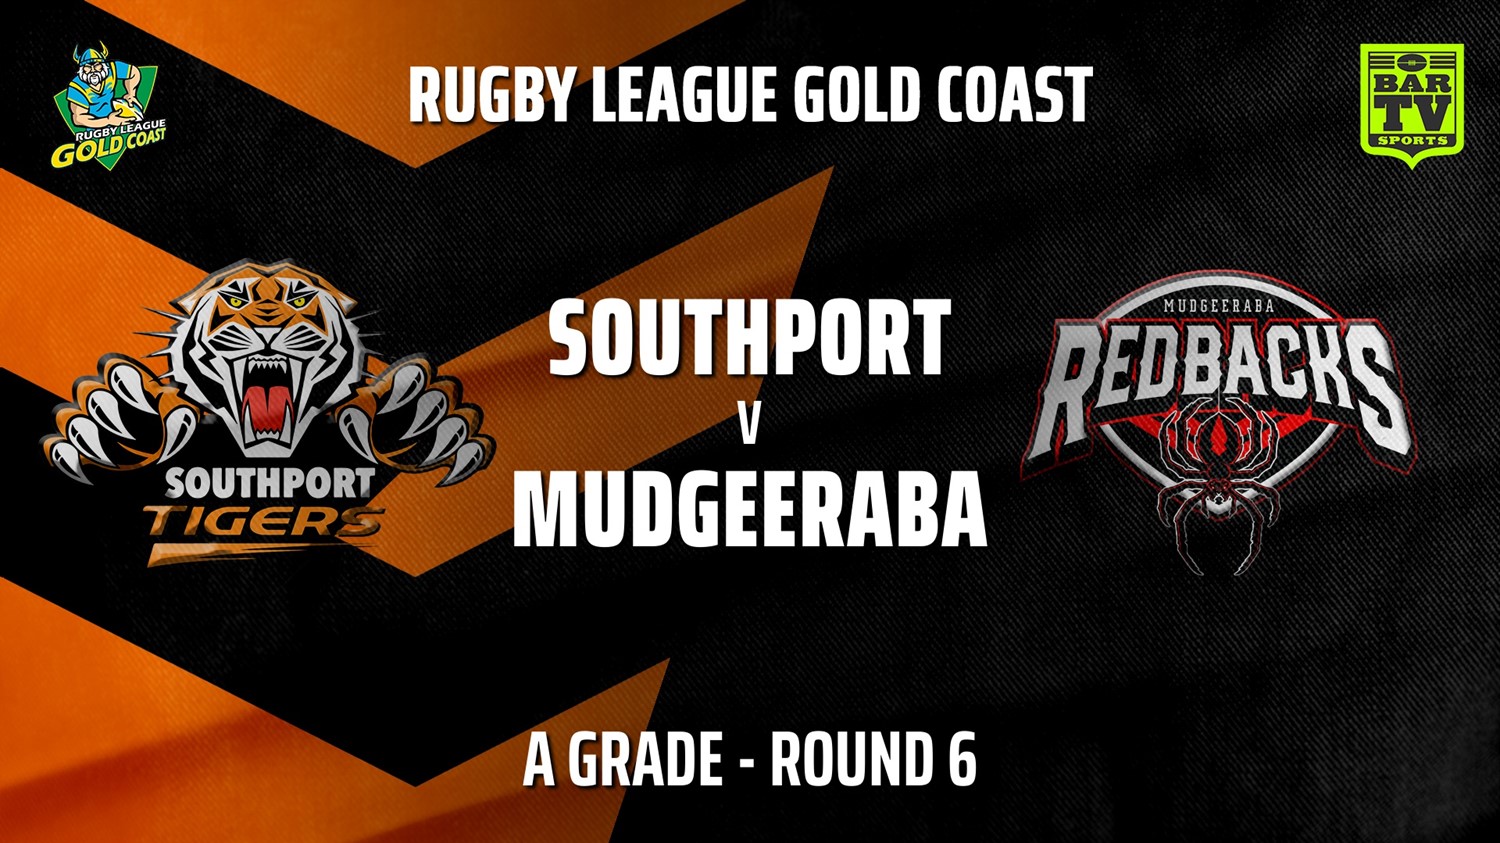 210613-Gold Coast Round 6 - A Grade - Southport Tigers v Mudgeeraba Redbacks Minigame Slate Image